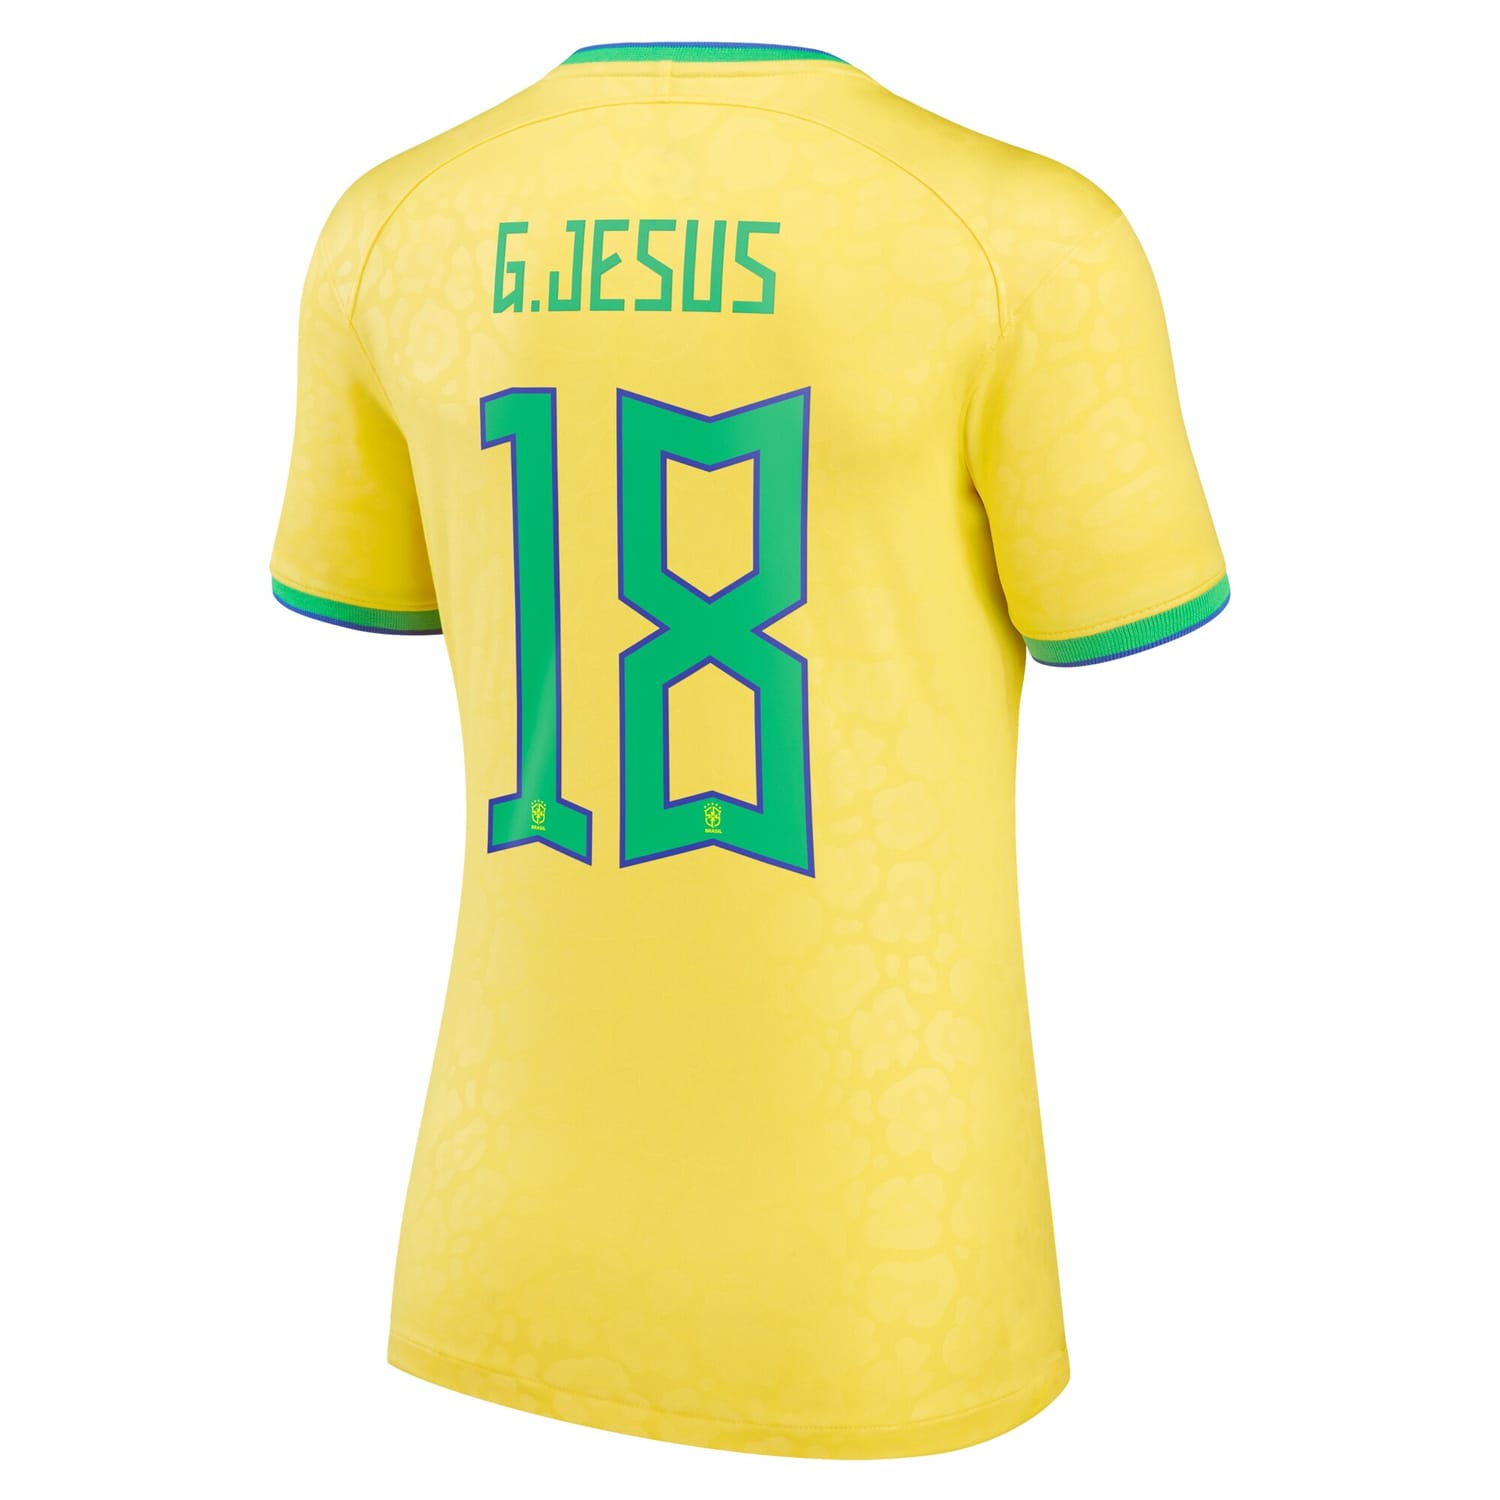 Brazil National Team Home Jersey Shirt Yellow 2022-23 player Gabriel Jesus printing for Women